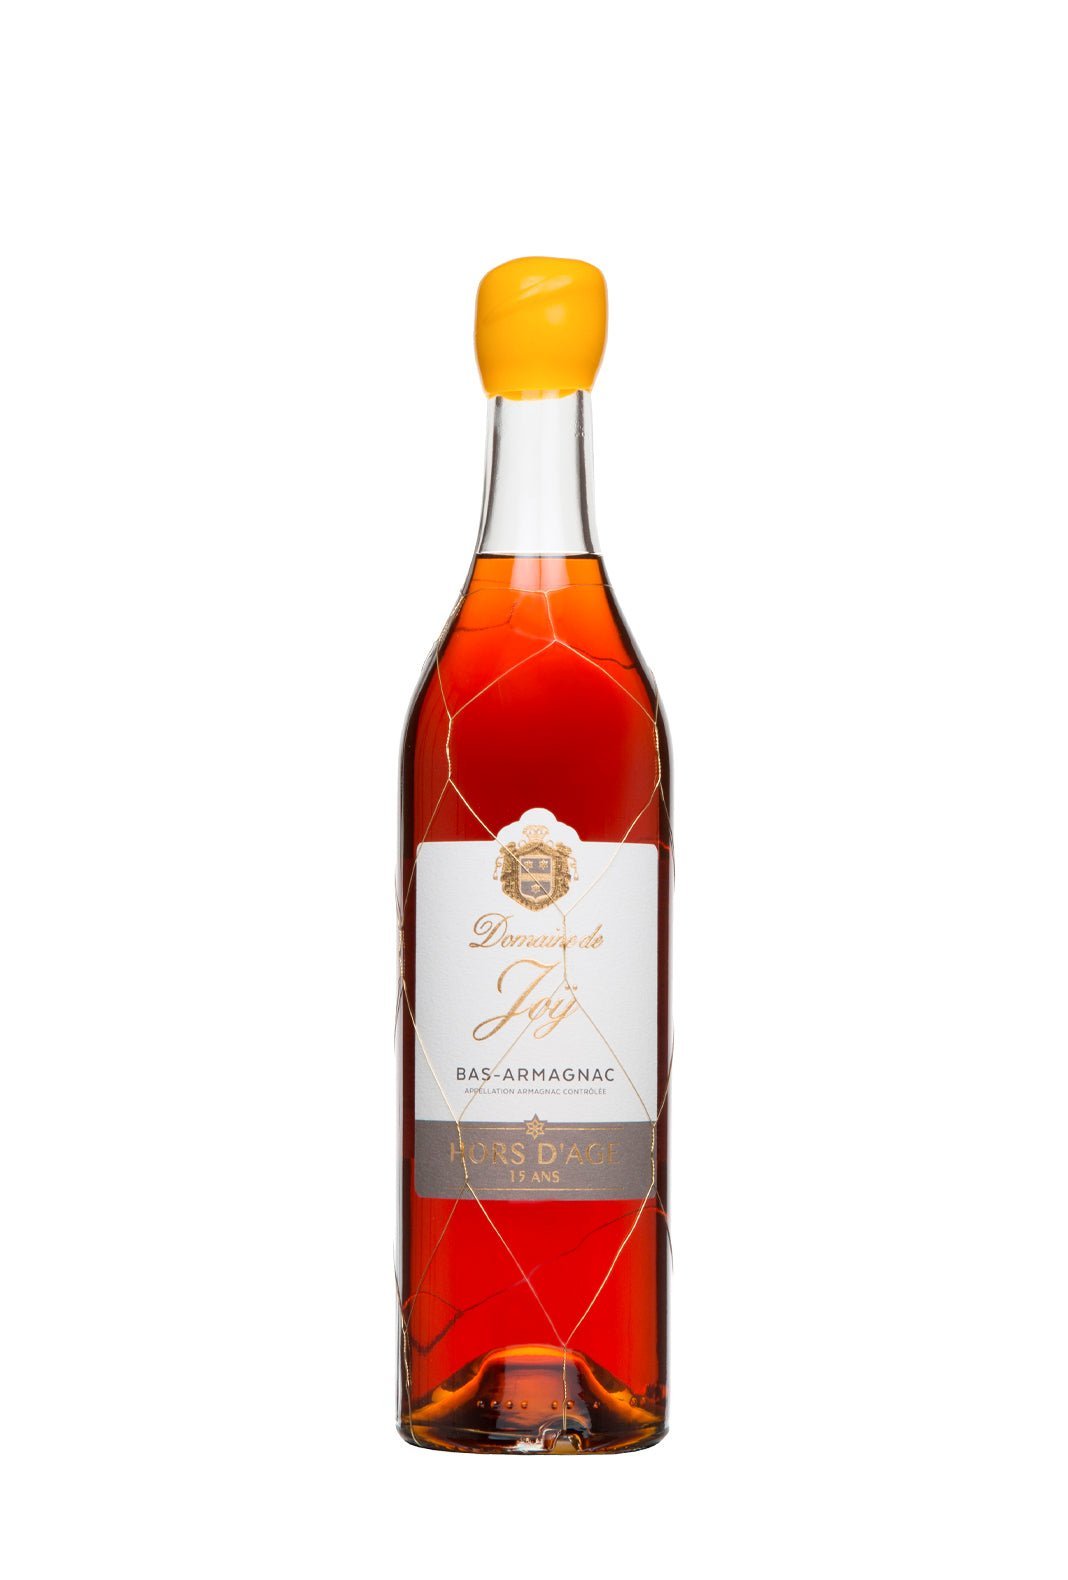 Domaine de Joy Bas Armagnac Hors dÕAge 15 years 40.5% 500ml | Brandy | Shop online at Spirits of France